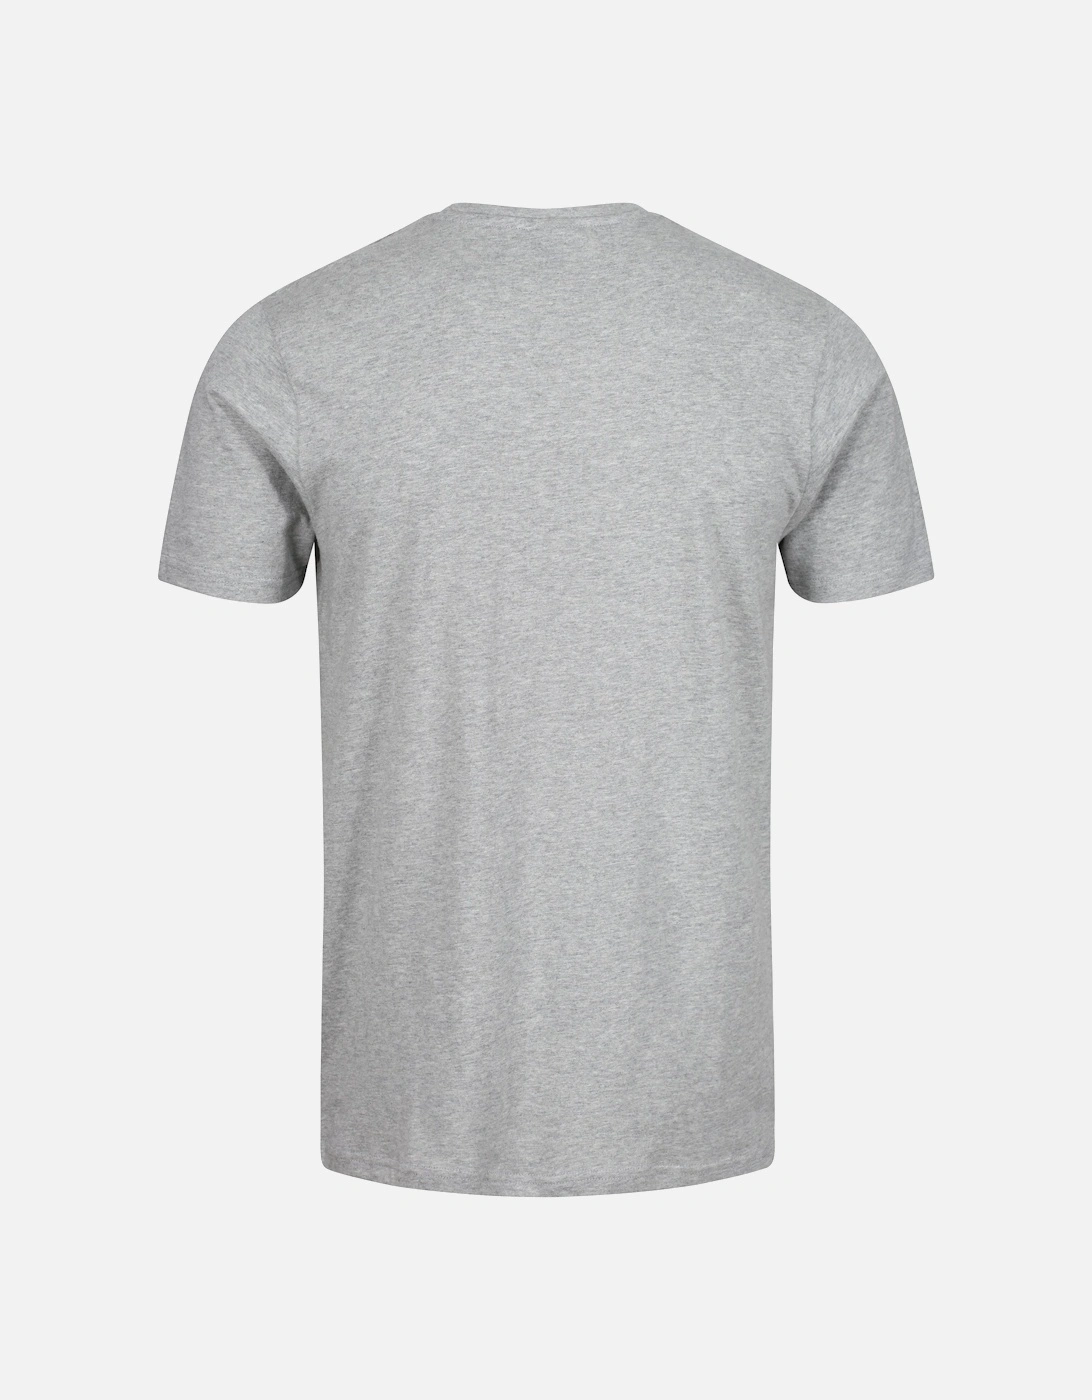 Prado SL Logo T-Shirt | Grey Marl